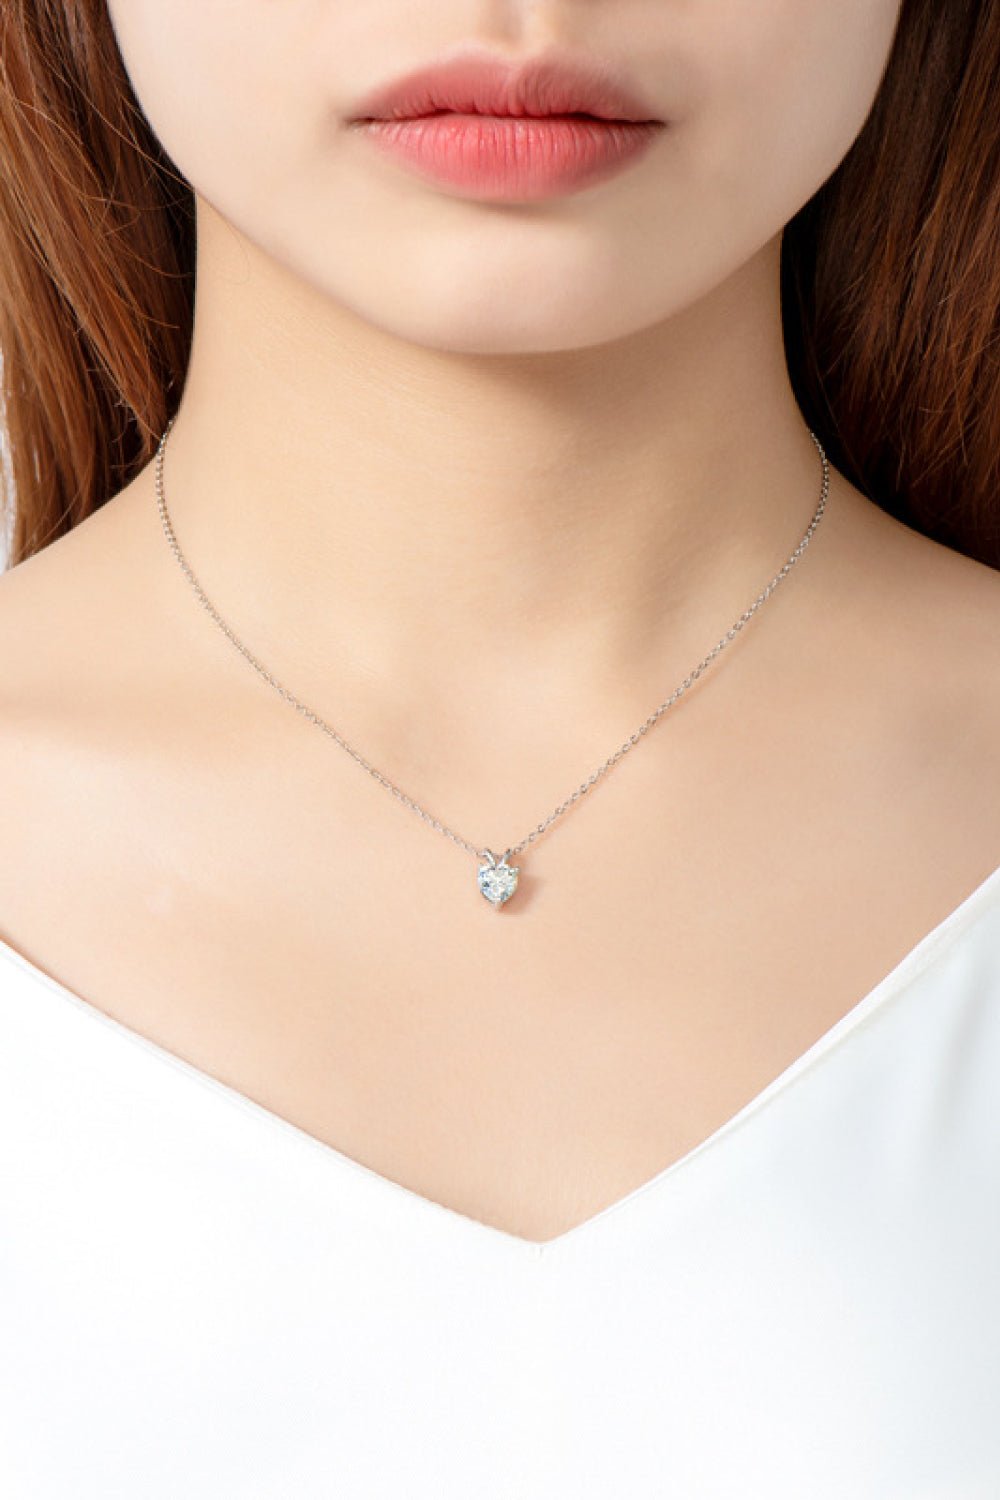 1 Carat Moissanite Heart-Shaped Pendant Necklace - Shah S. Sahota